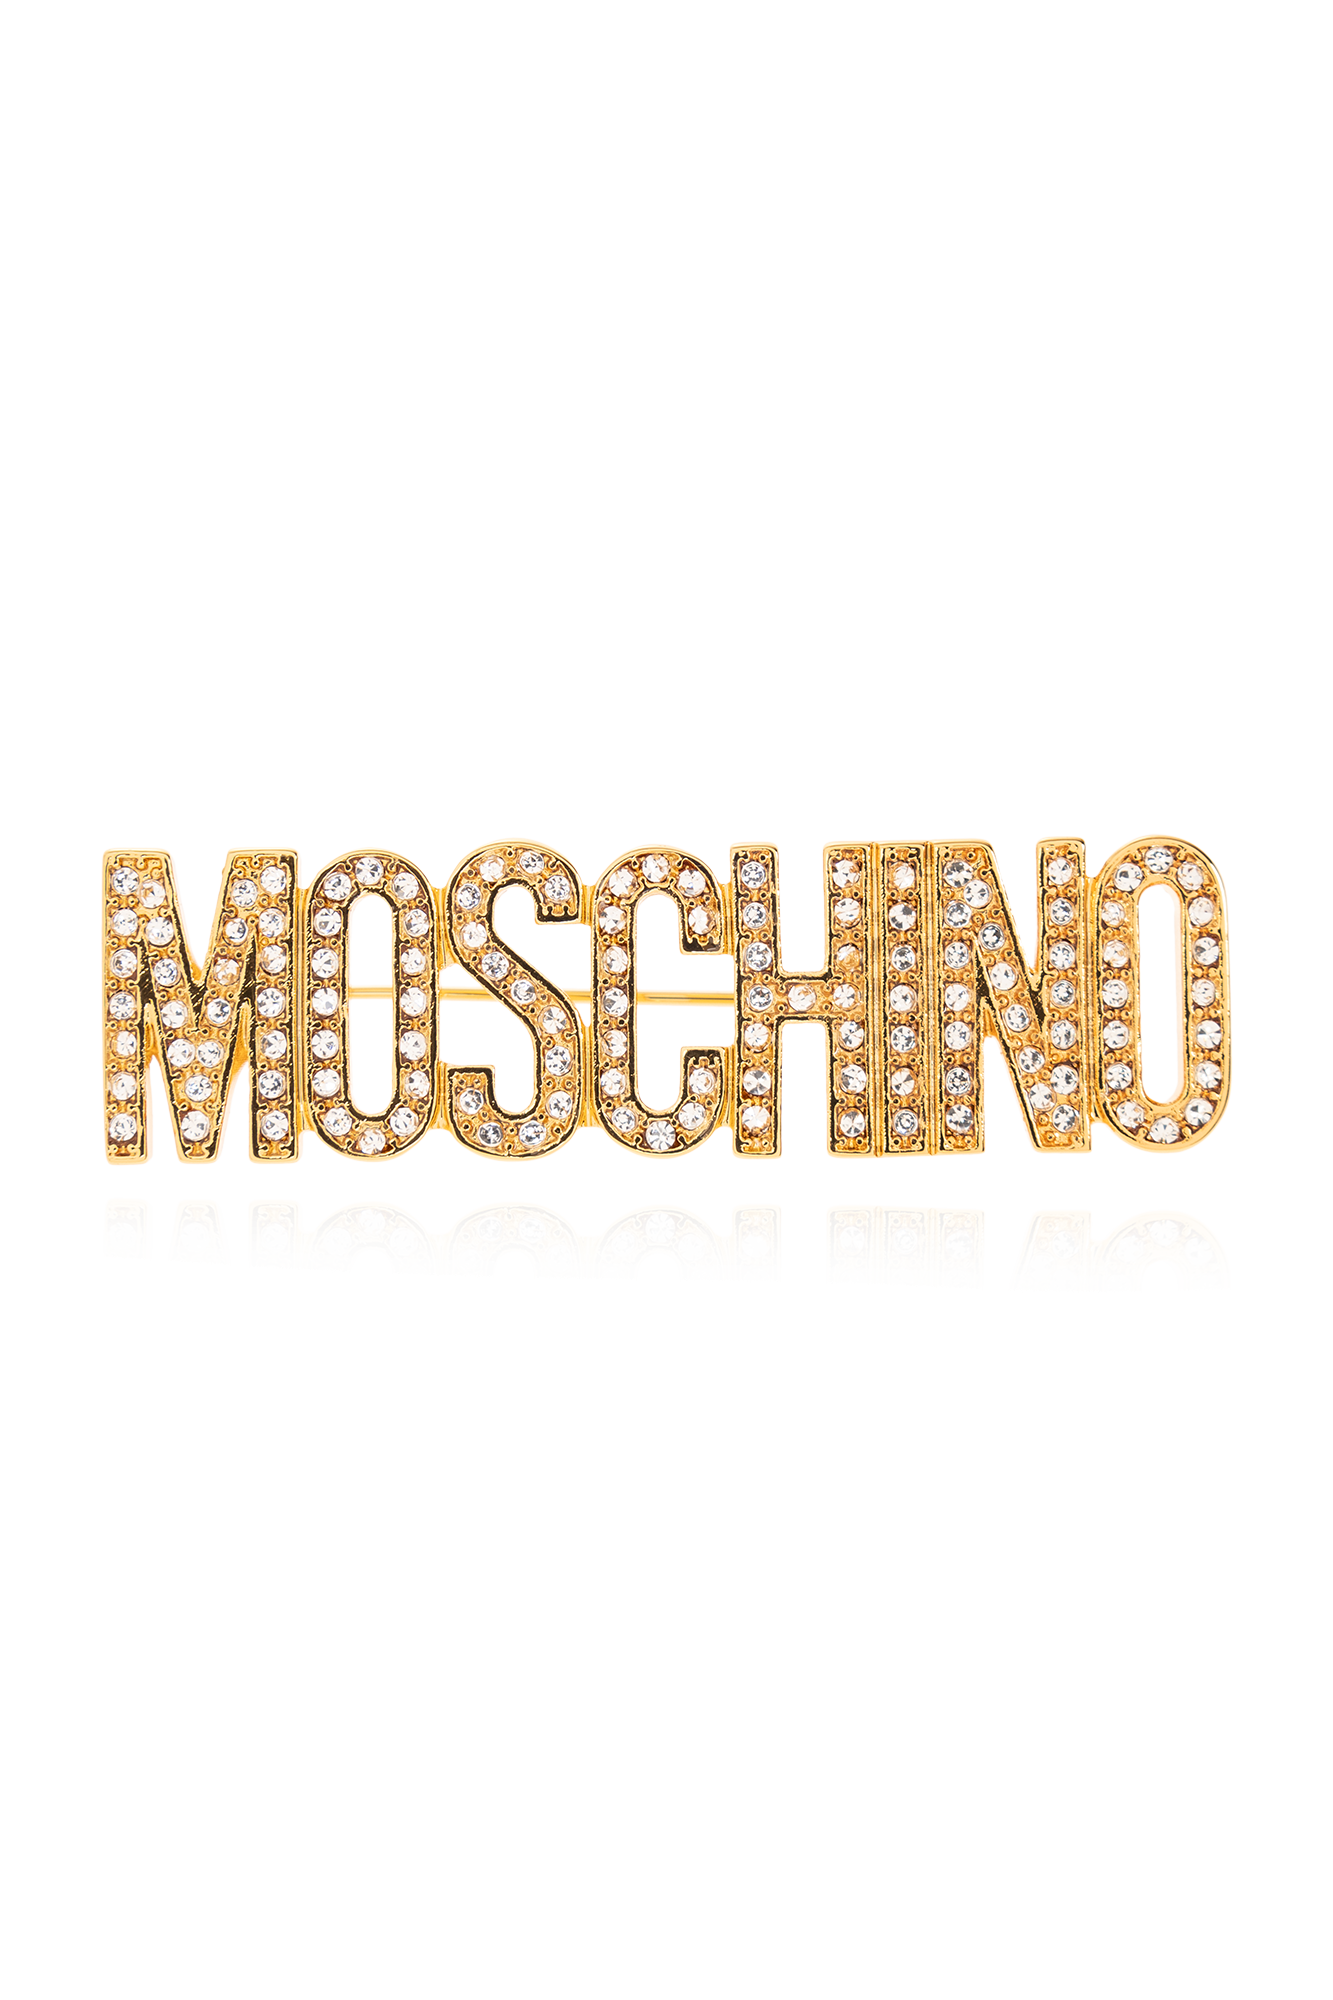 Moschino Brooch with logo